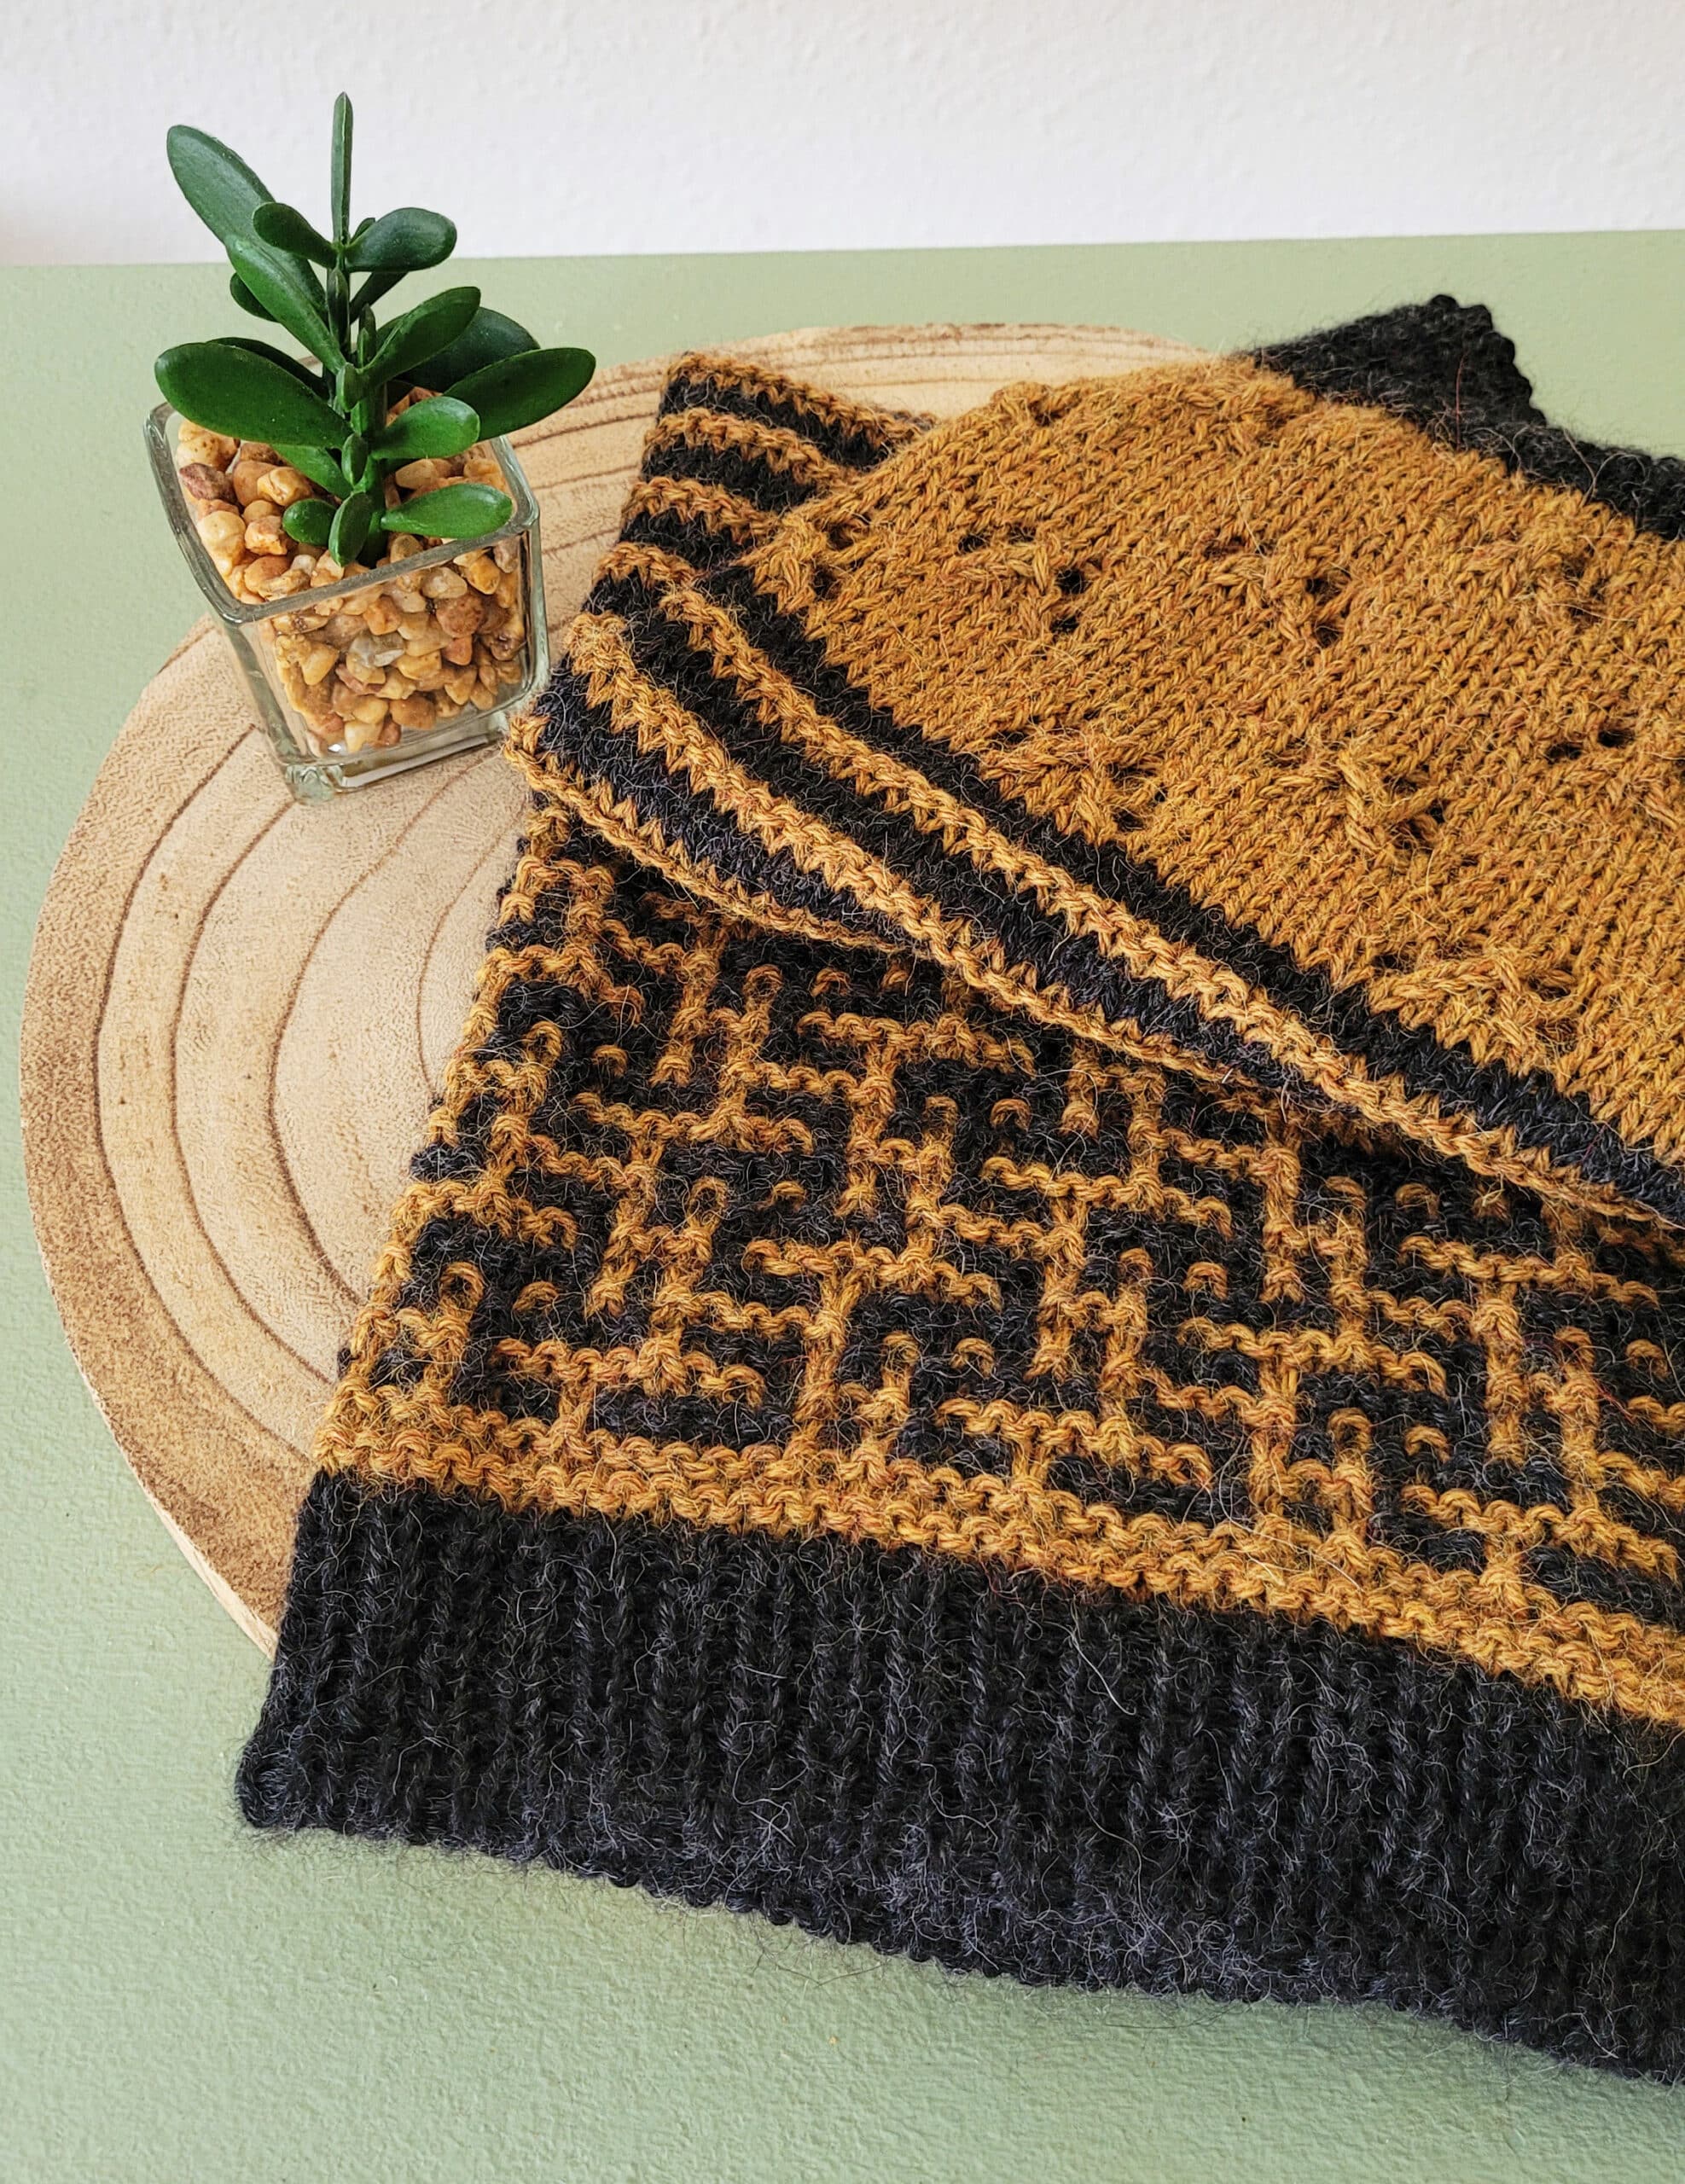 mosaic knitting